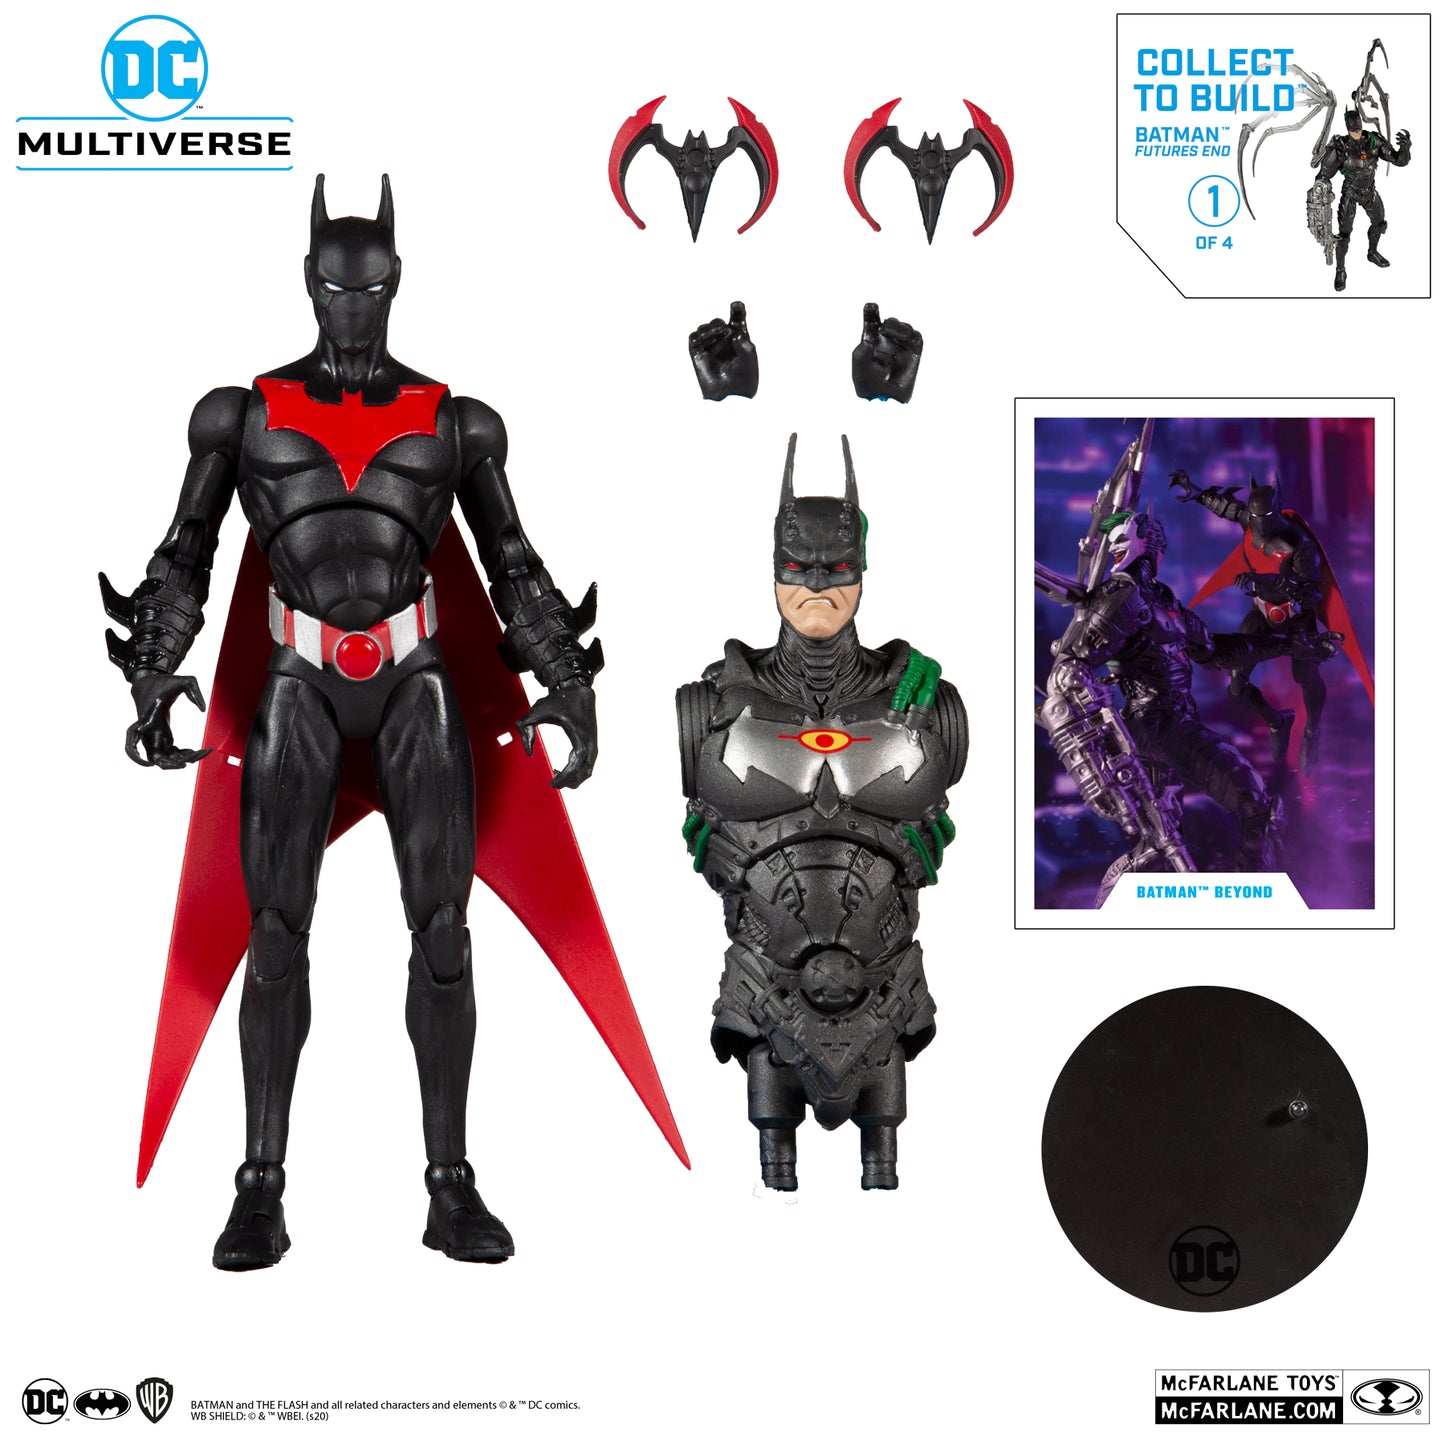 McFarlane Toys DC Multiverse Batman Beyond Batman [Jokerbot BAF Included]